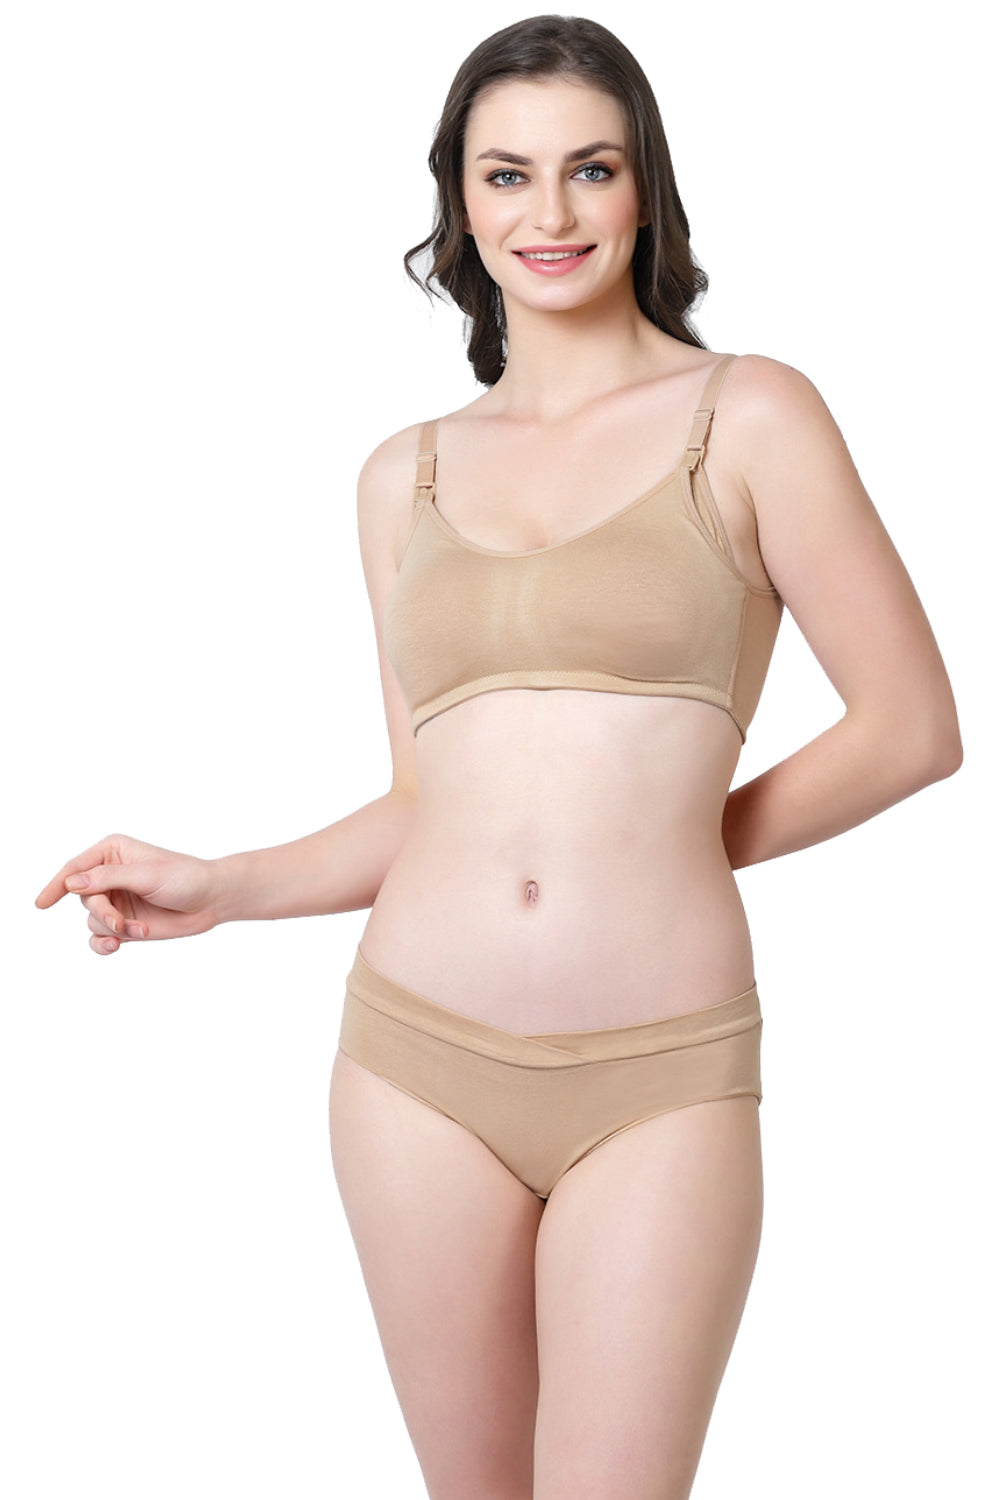 Inner Sense Women’s Organic Cotton Bamboo Soft Feeding bra for Women |  Wire-free, Non-padded, Full coverage, Maternity bra